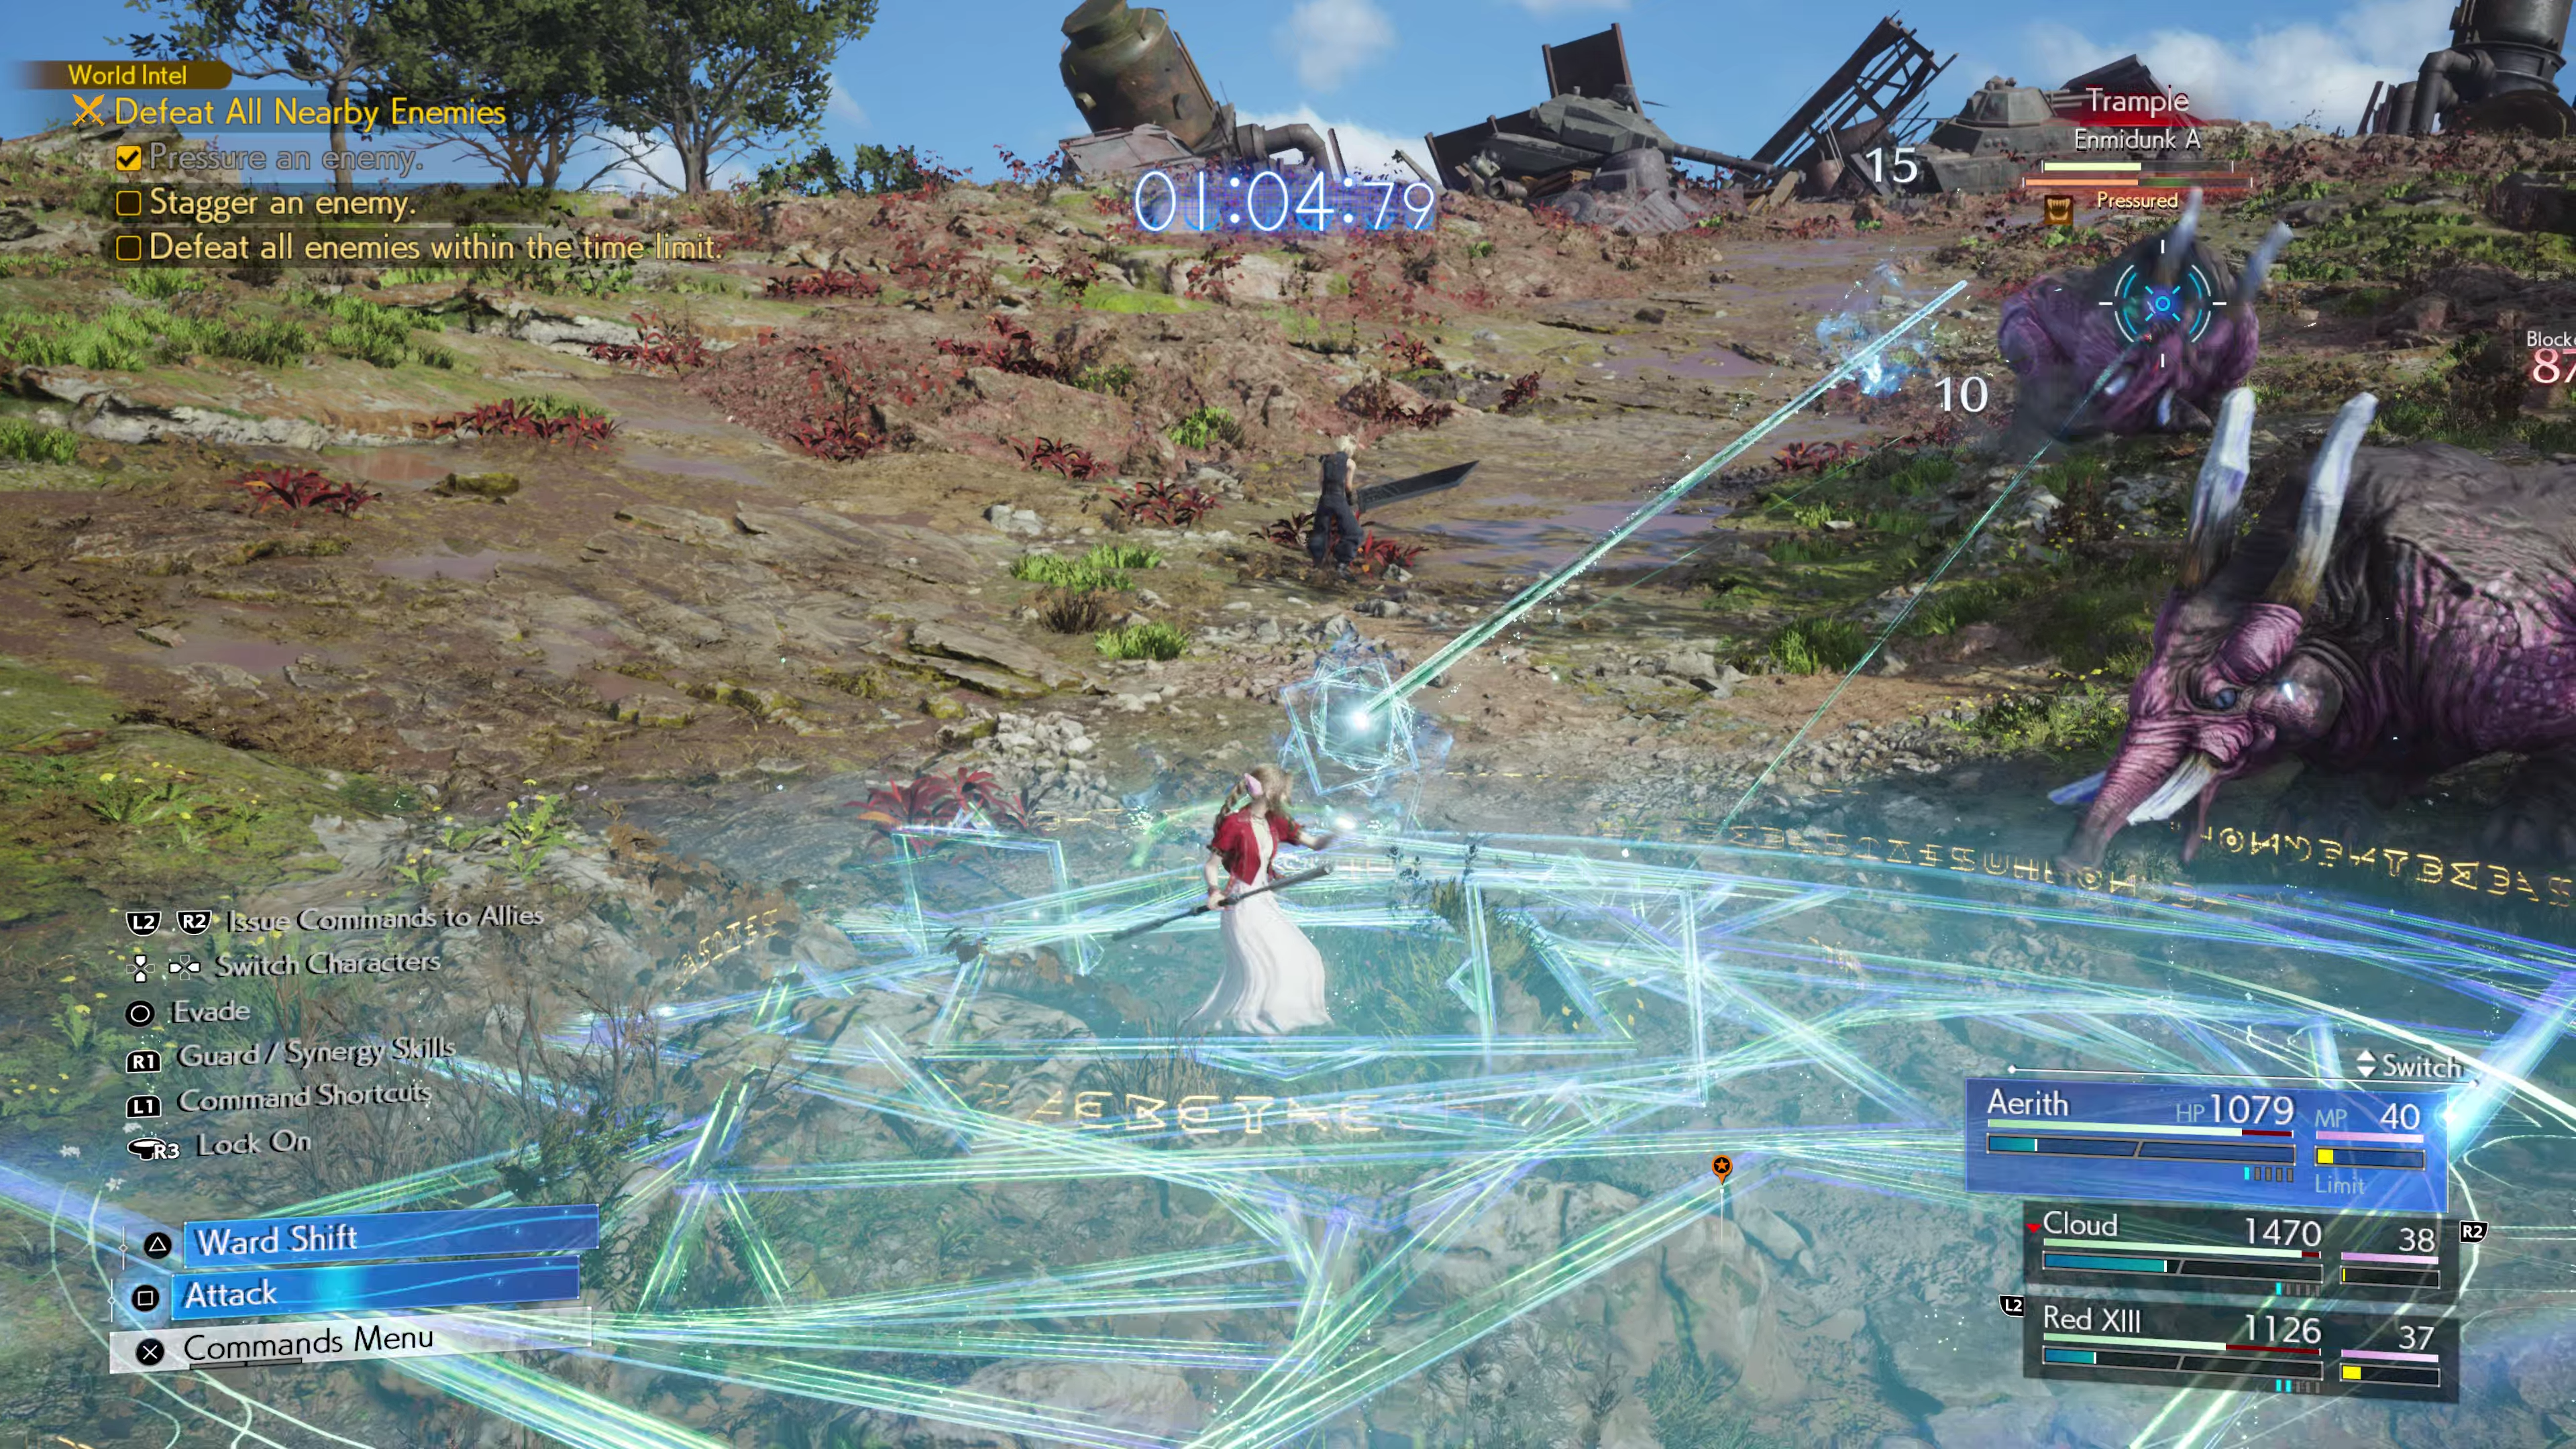 Final Fantasy VII Rebirth TGS gameplay deep dive - Kalm, chocobos